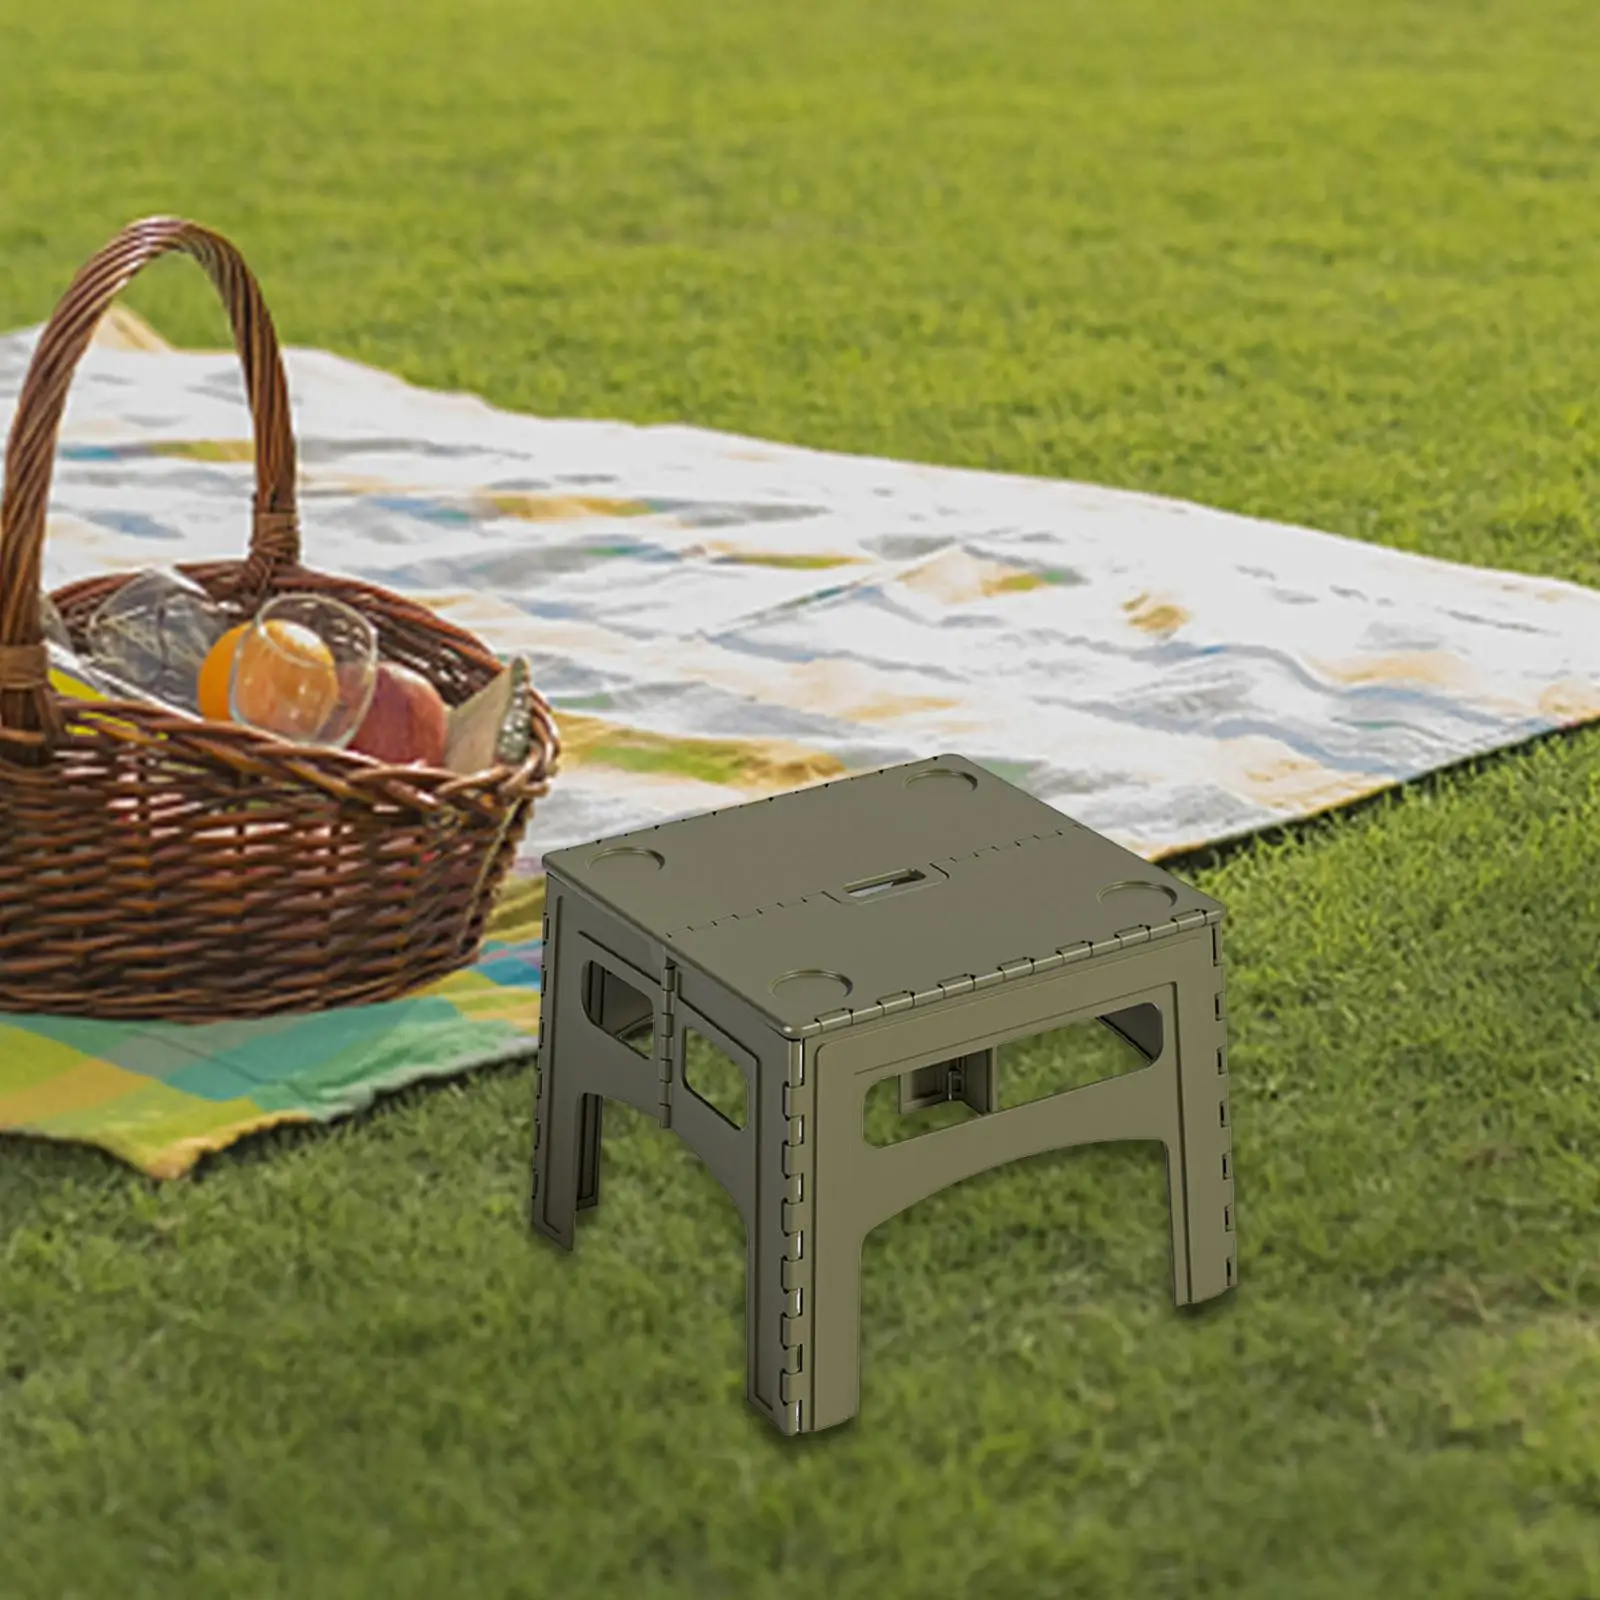 Outdoor Folding Table, Foldable Picnic Table, Portable Camp Table, Camping Table for Backpacking, Cooking, Garden